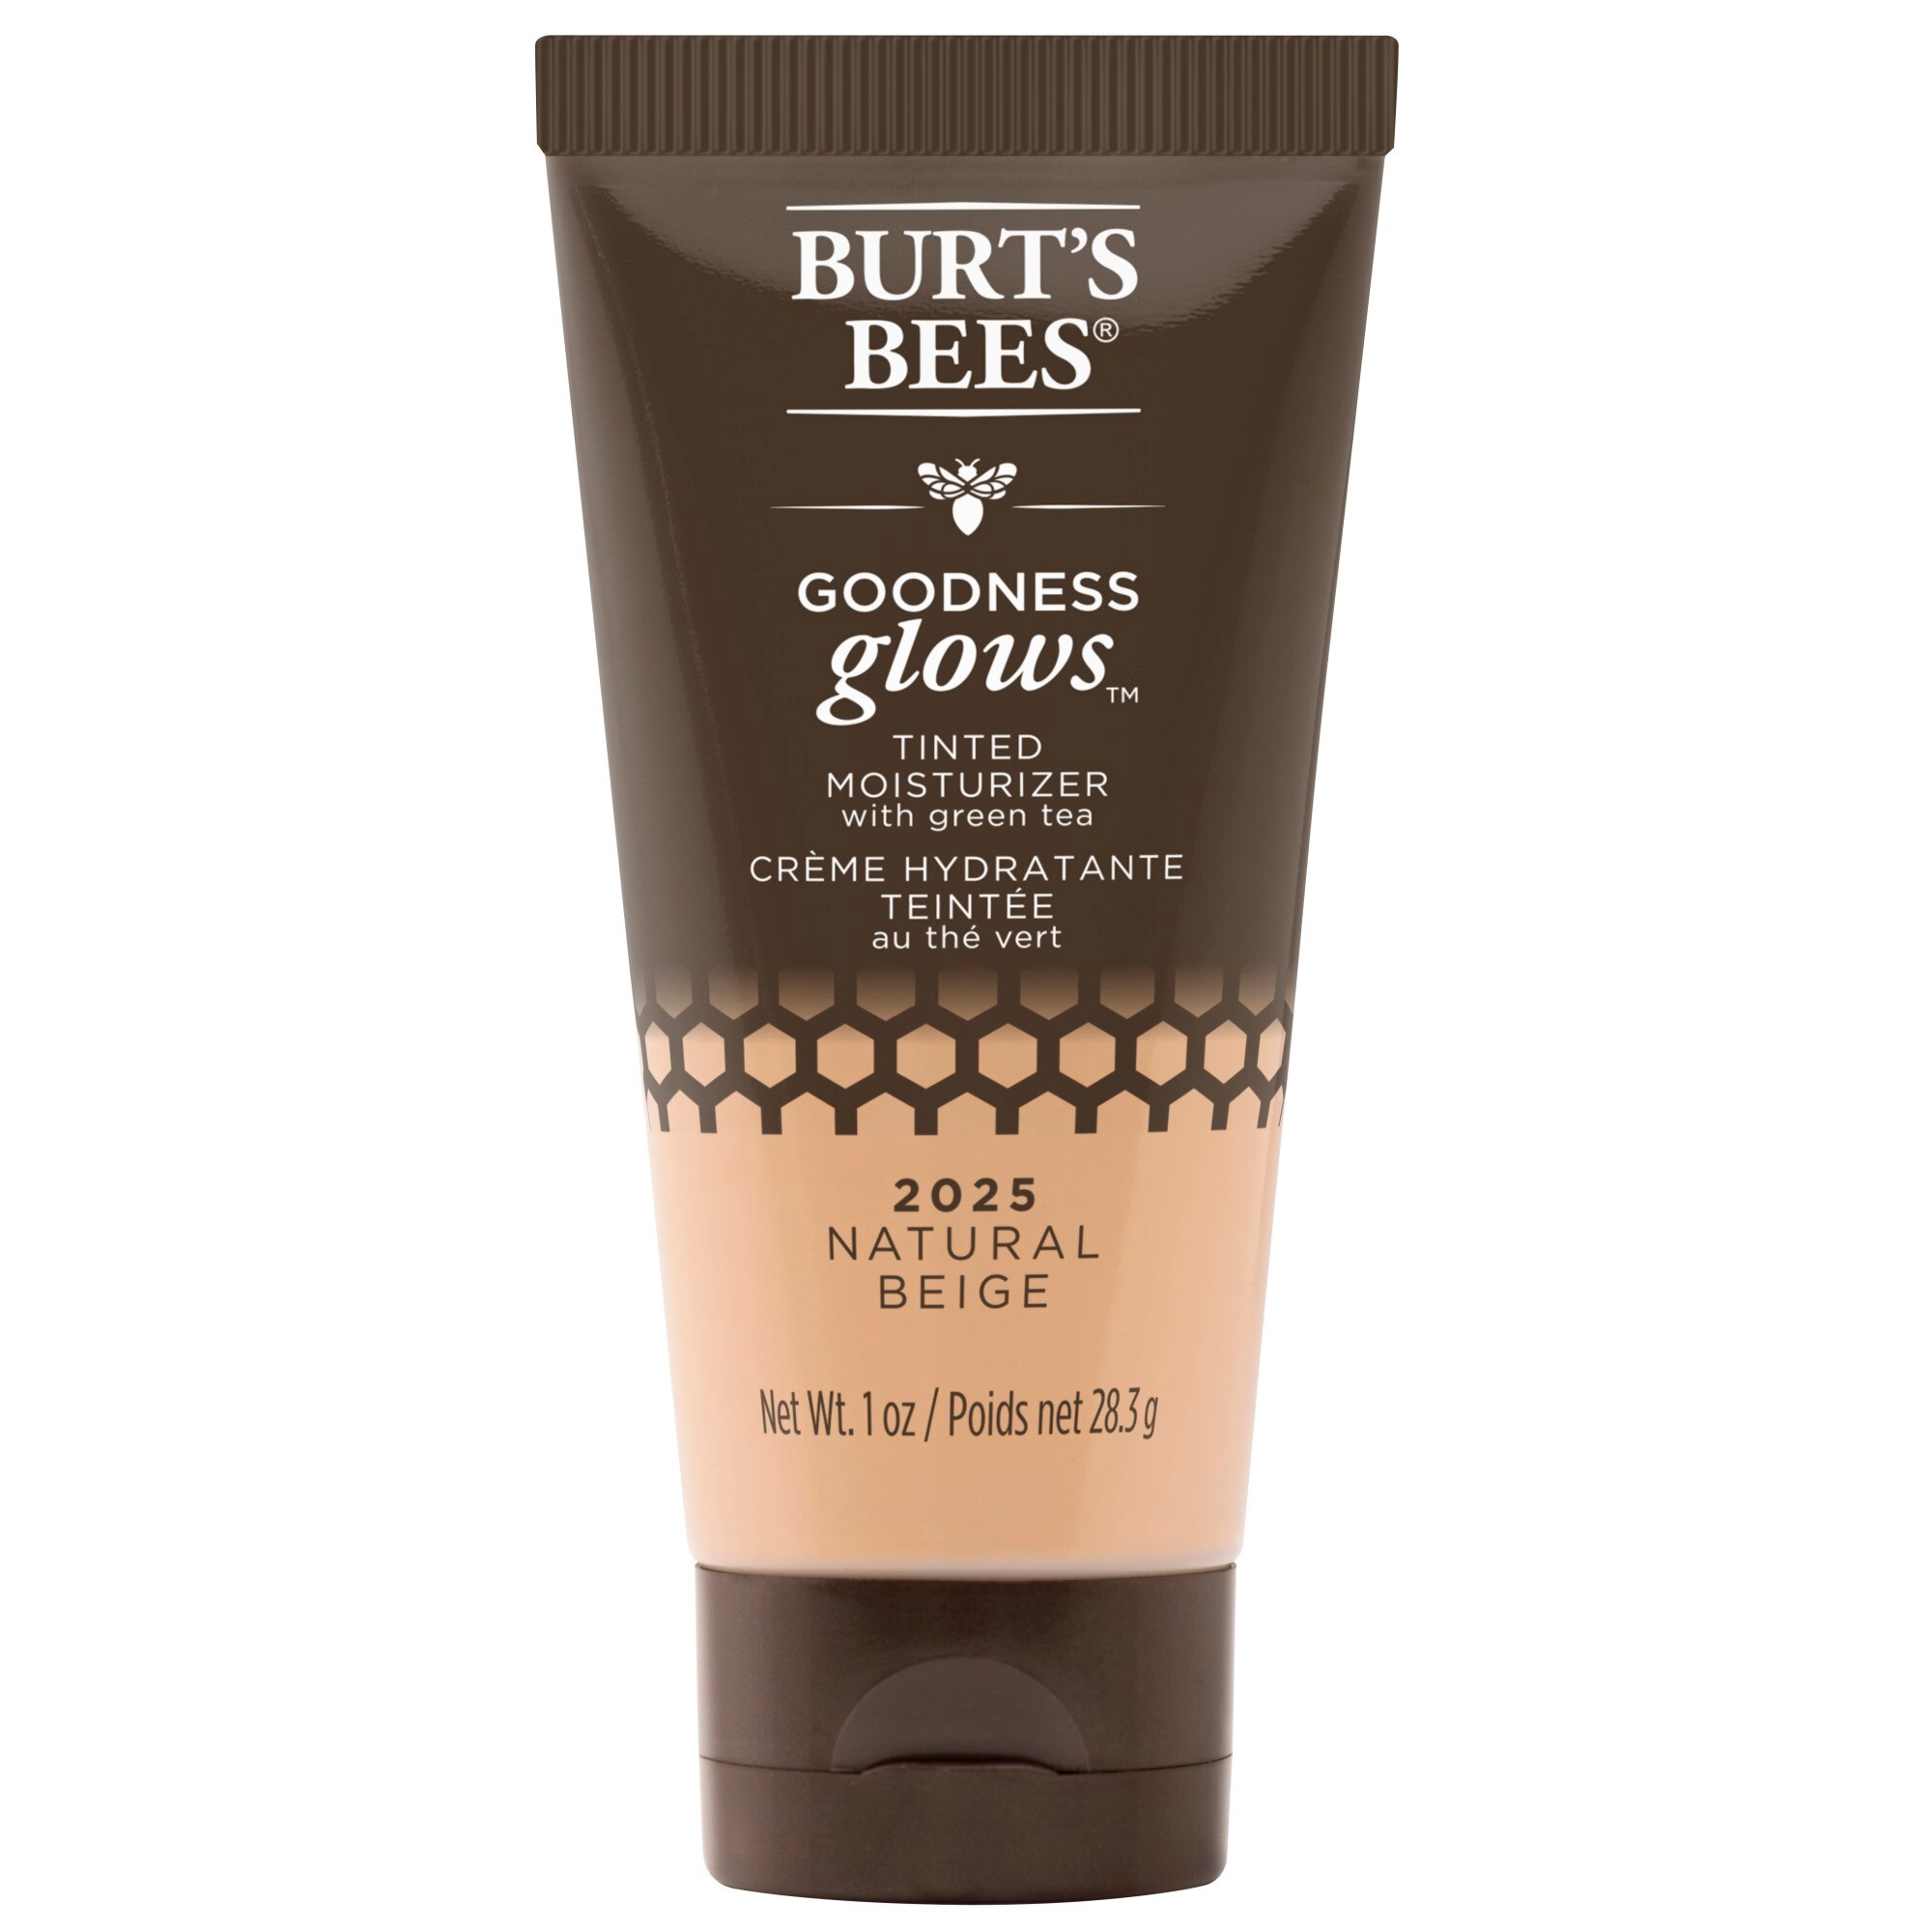 Burt's Bees Goodness Glows Tinted Moisturizer, Rich In Antioxidants, Natural Beige - 1 Oz , CVS